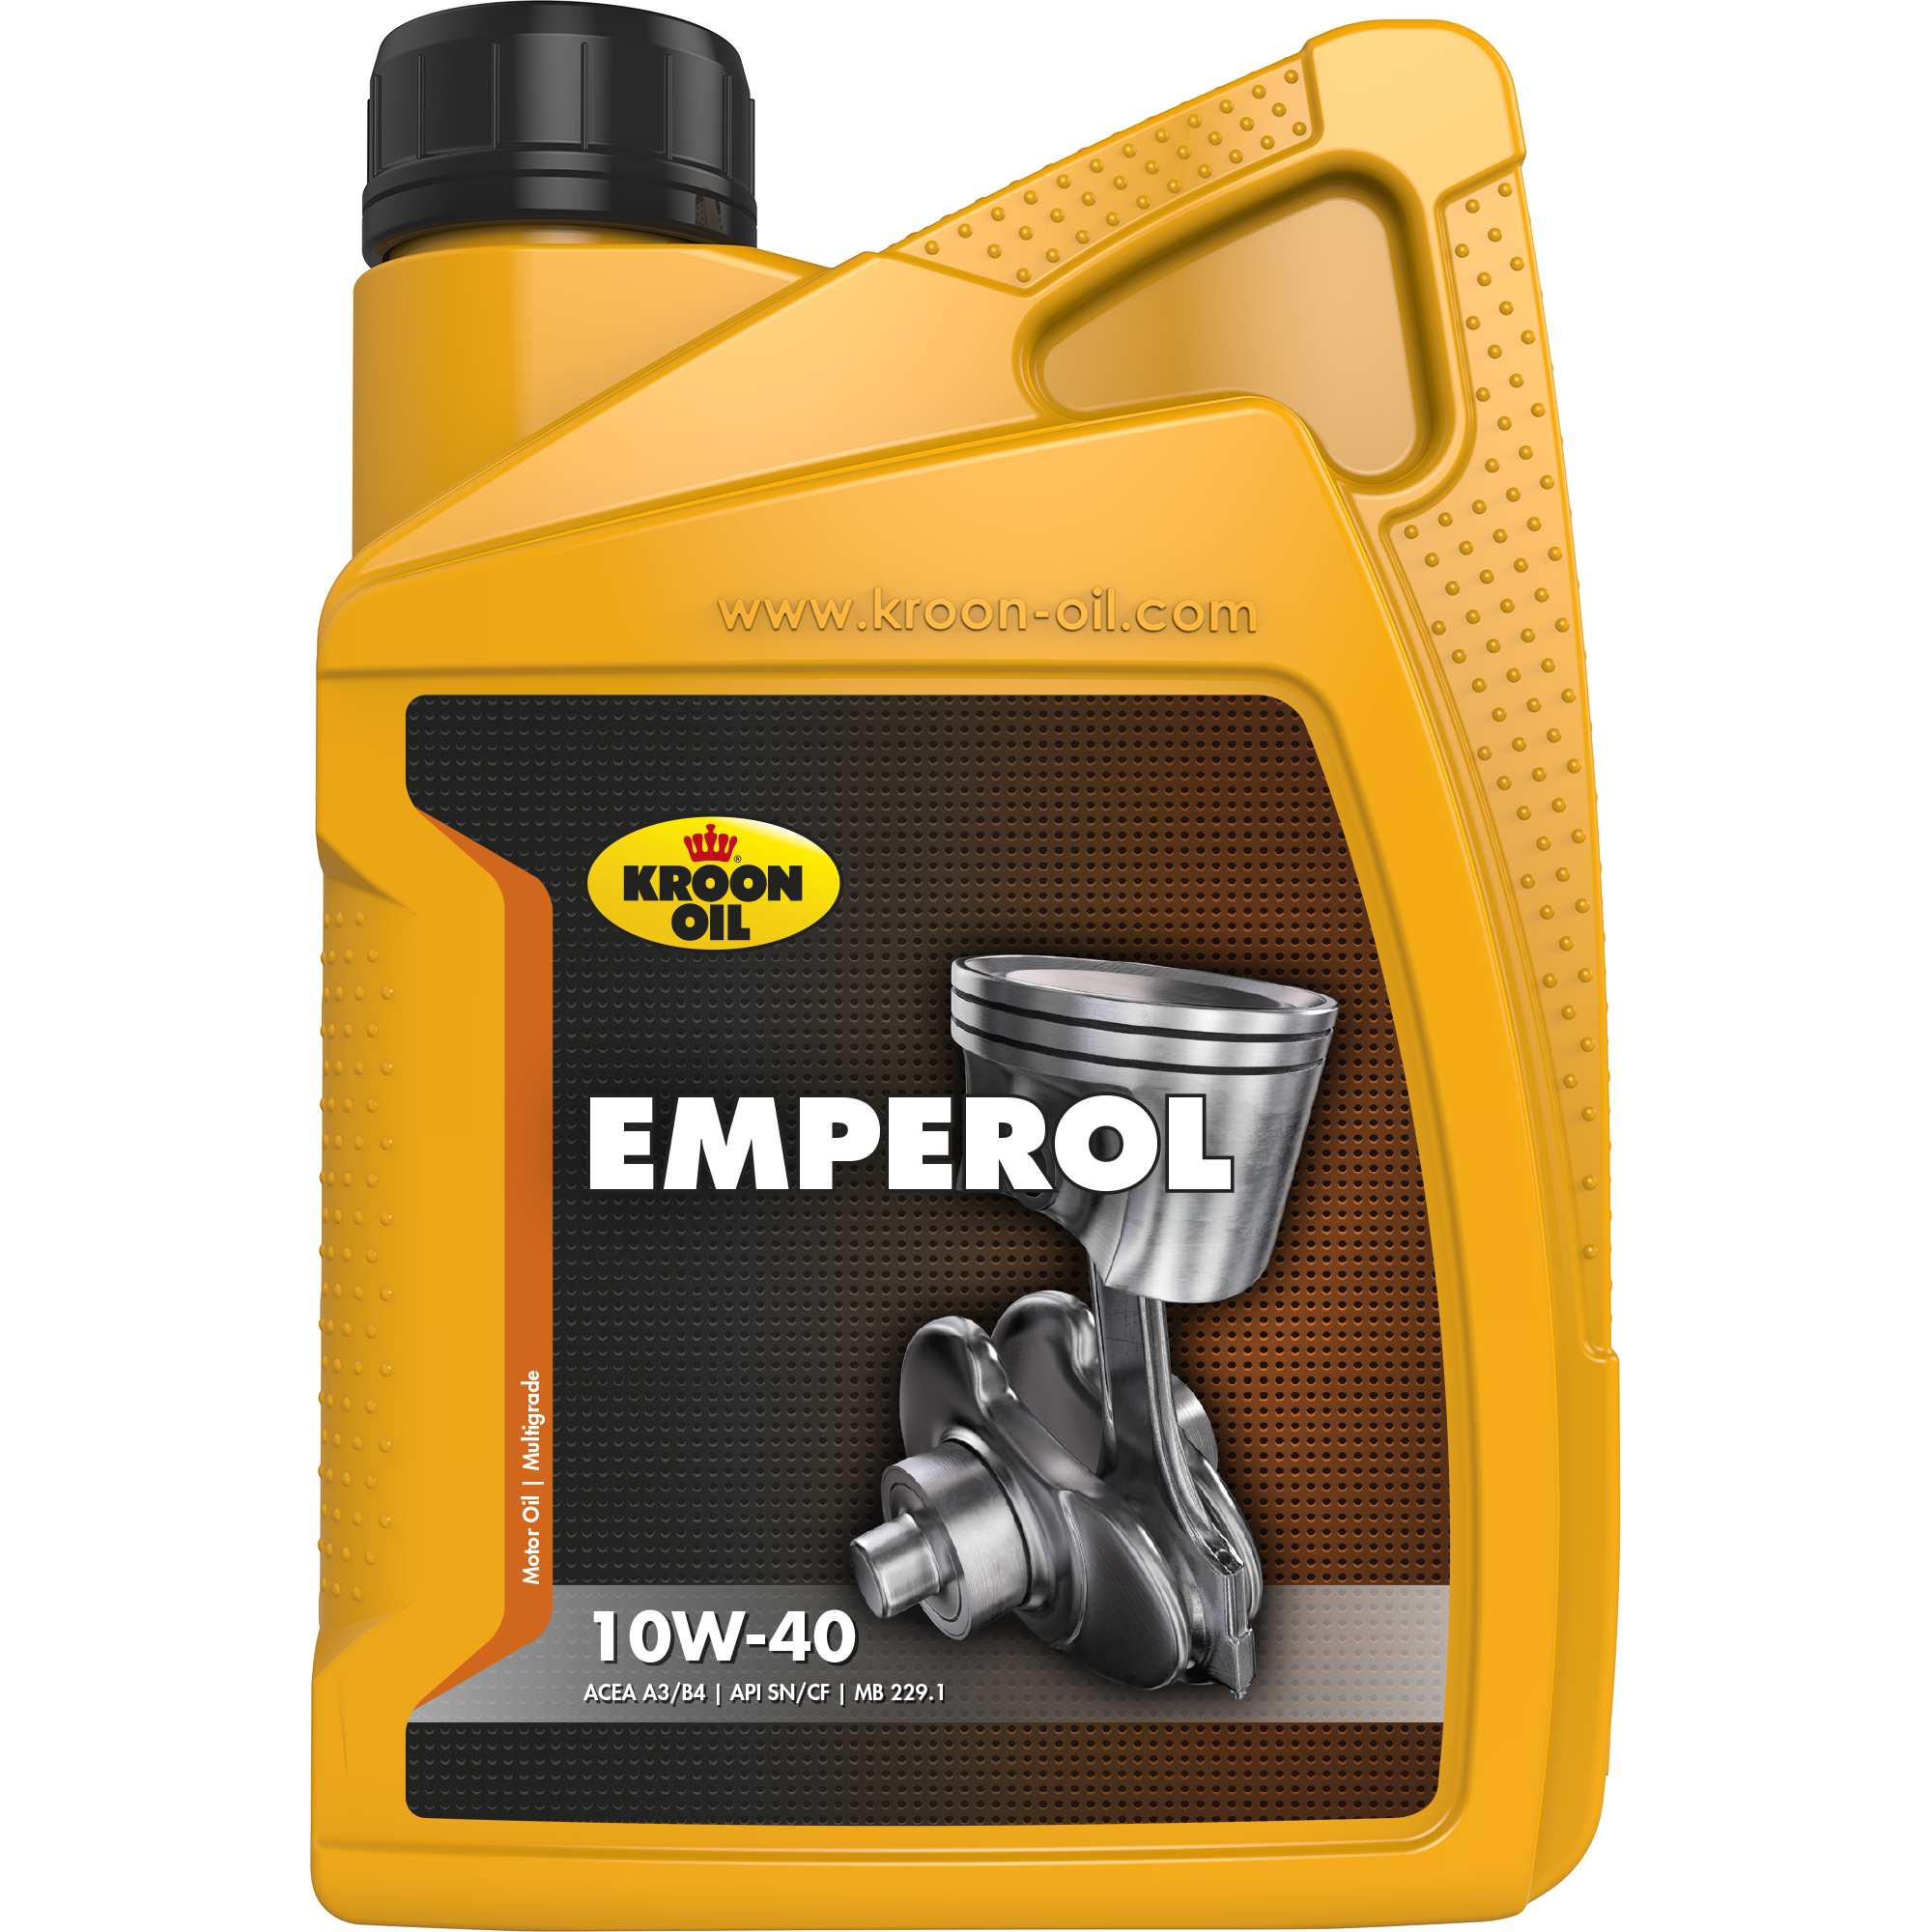 Kroon-Oil Emperol 10W-40, 1 lt